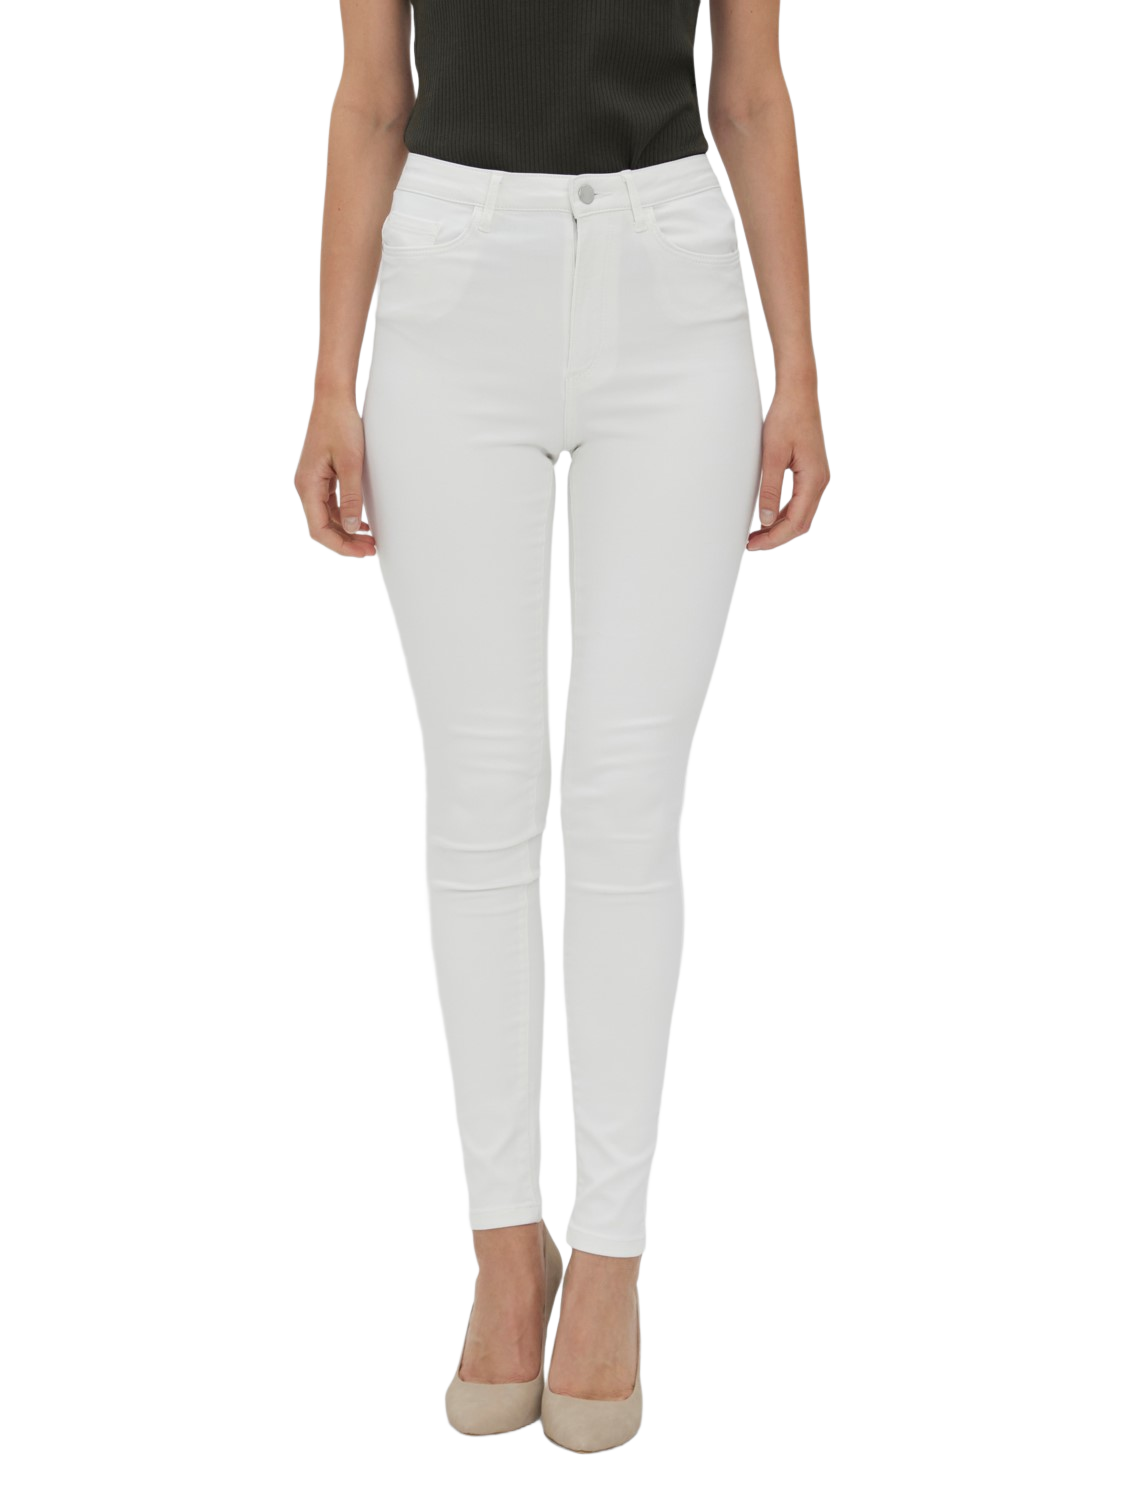 Vero Moda Damen Jeans VMSOPHIA VI403- Skinny Fit - Weiss - Bright White